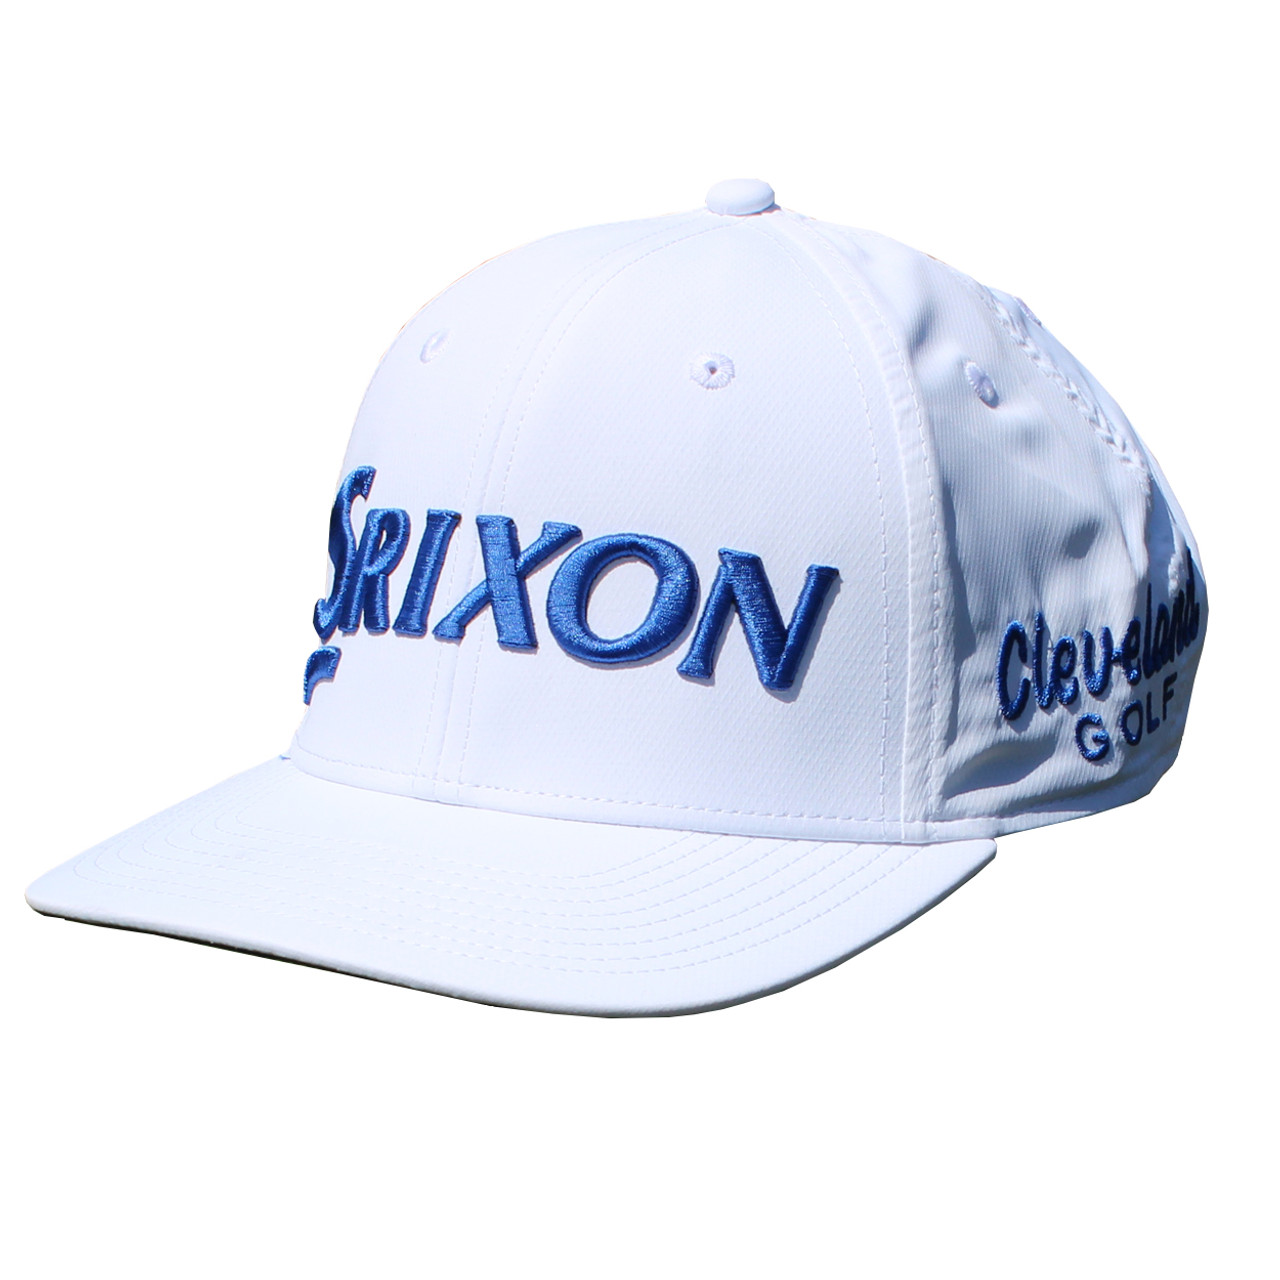 SRIXON Golf Z Star Mens Baseball Hat Cap Blue Adjustable Clasp